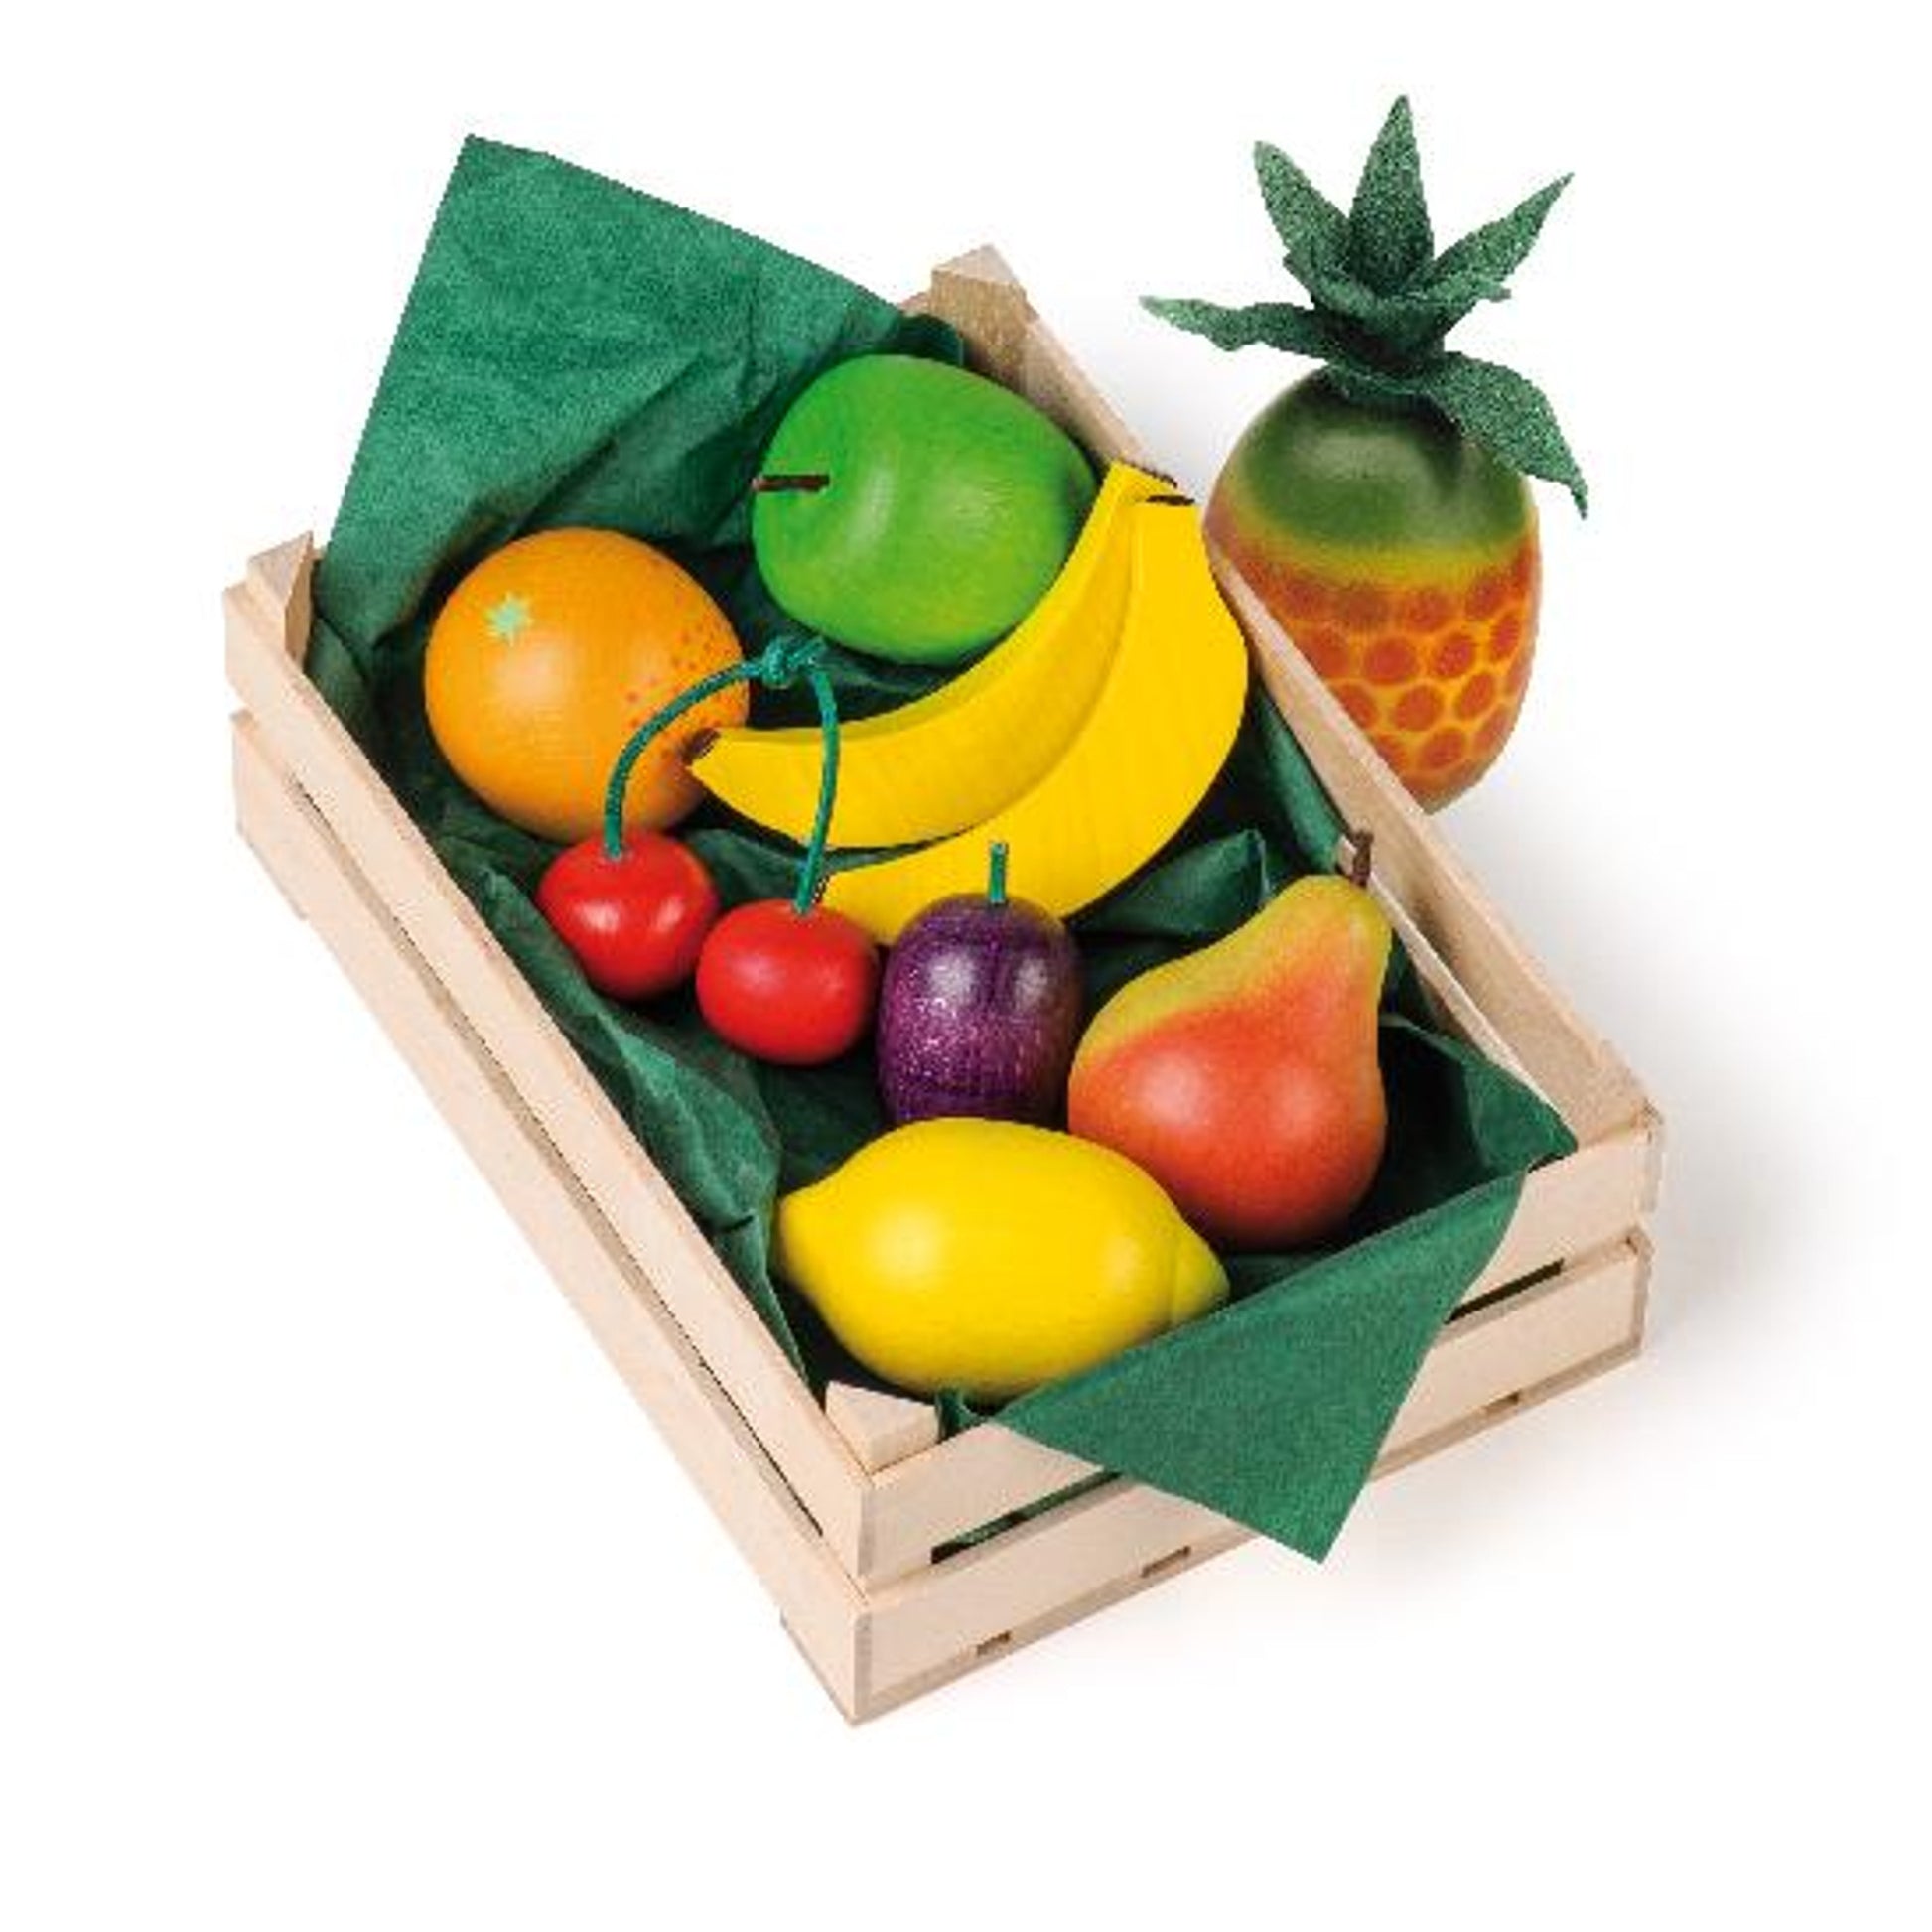 Erzi wooden fruit in crate large set